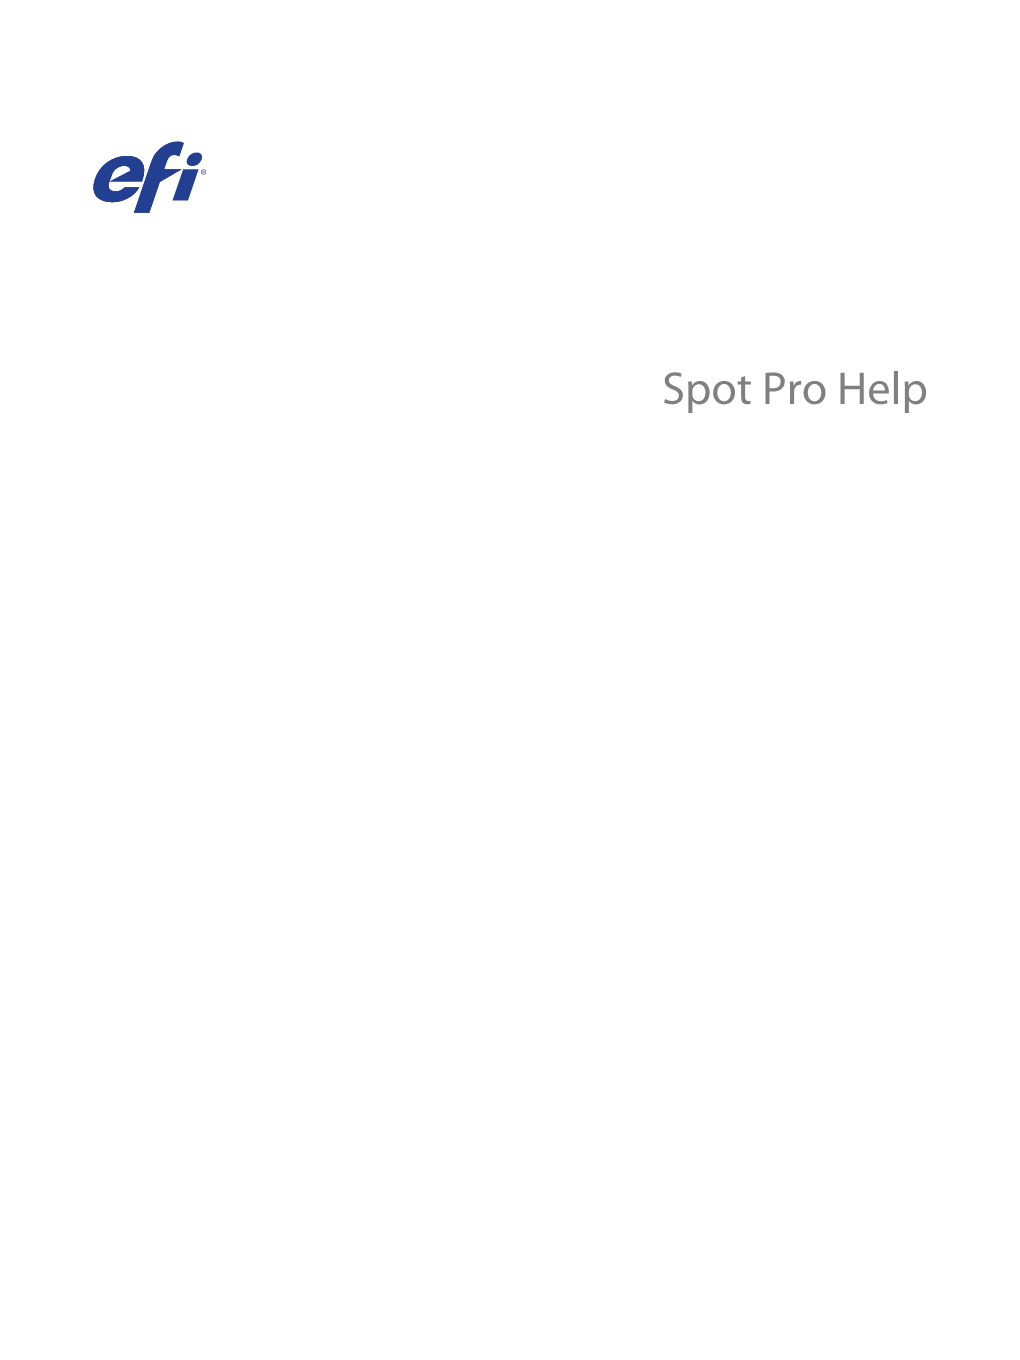 Spot Pro Help © 2019 Electronics for Imaging, Inc